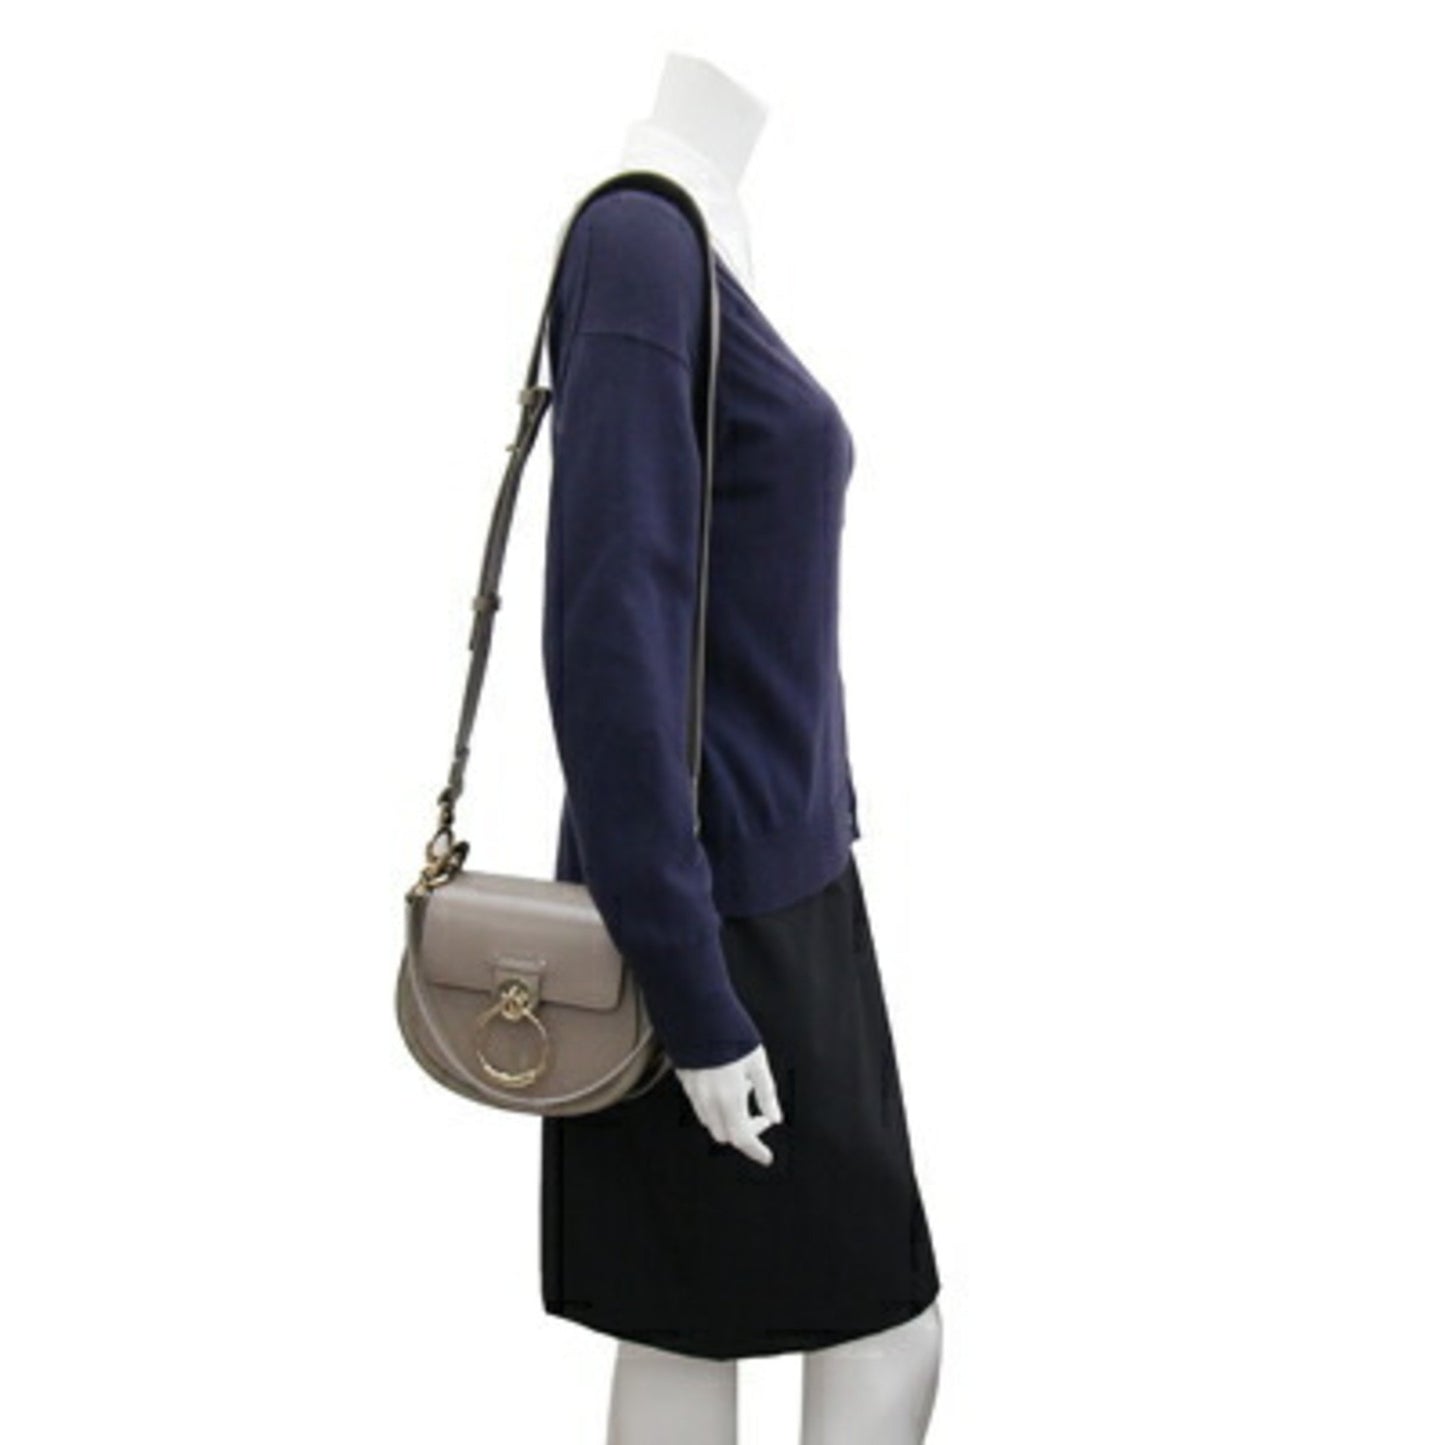 Chloe Women's Sophisticated Leather Shoulder Bag - Beige in Beige